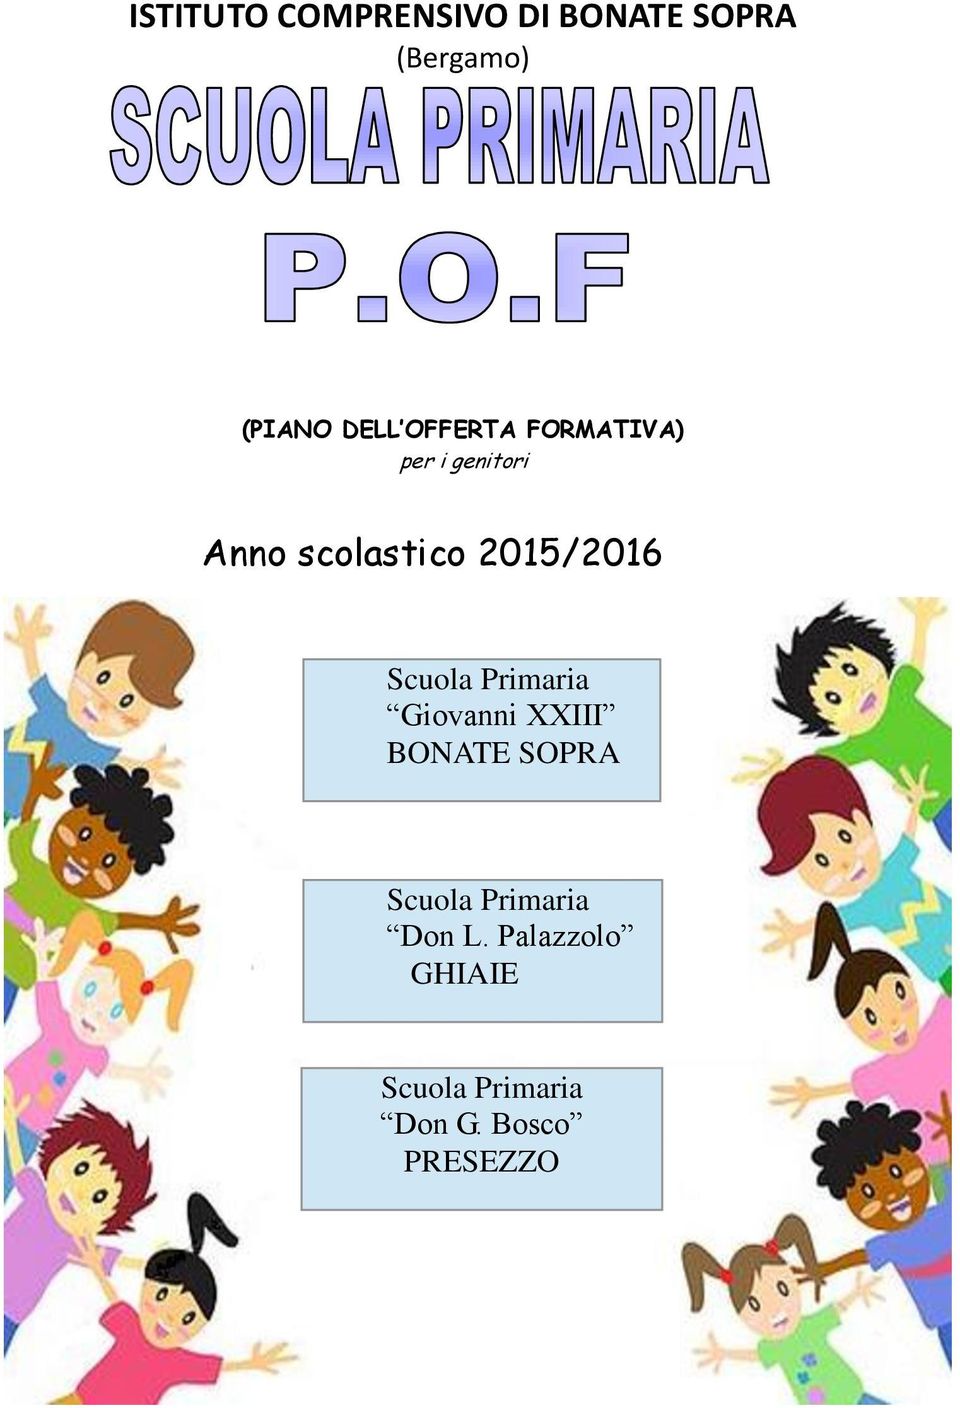 2015/2016 Scula Primaria Givanni XXIII BONATE SOPRA